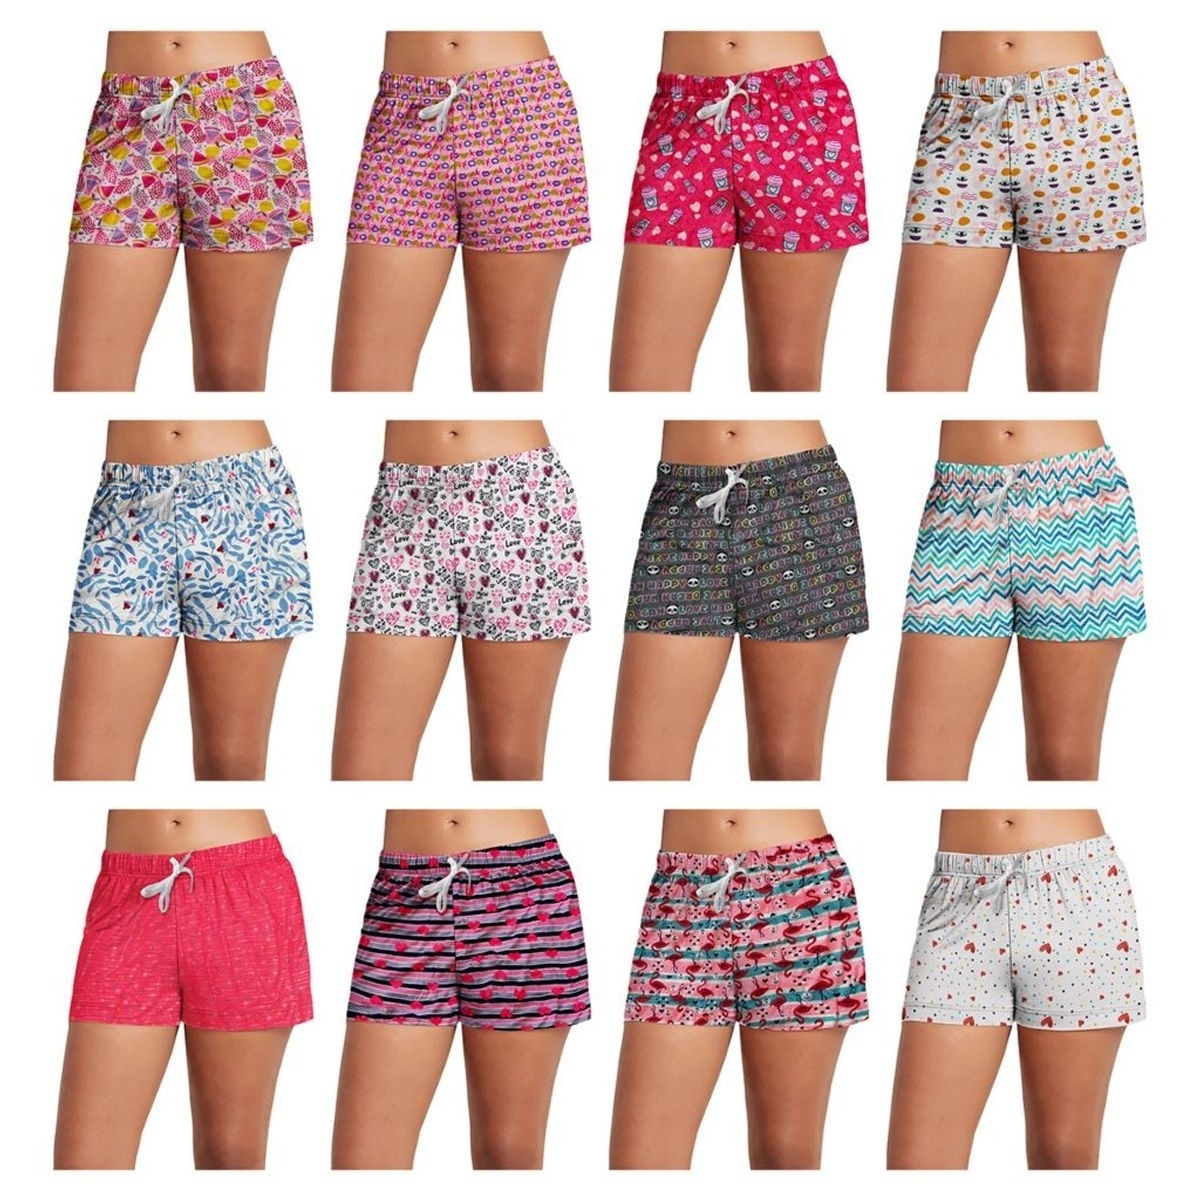 4-Pack: Women's Super-Soft Lightweight Fun Printed Comfy Lounge Bottom Pajama Shorts W/ Drawstring - Medium, Shapes